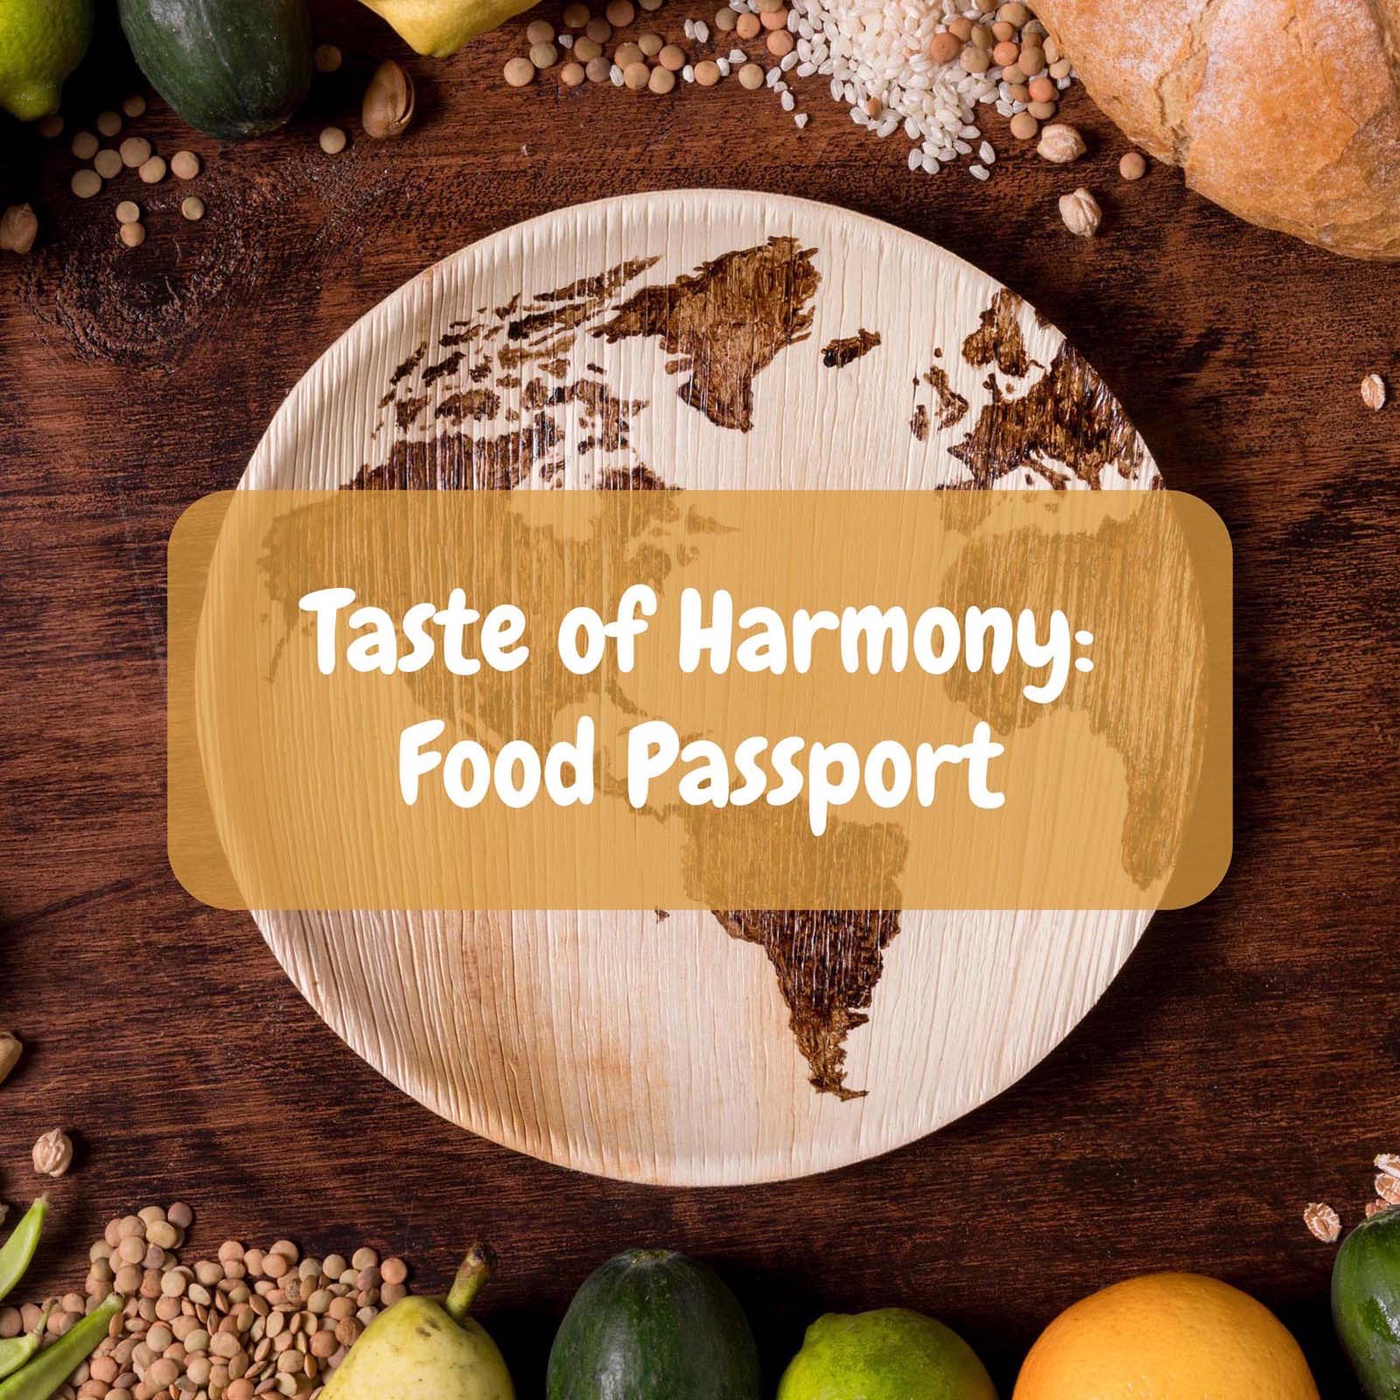 Food Passport: Highlights of National Cuisine